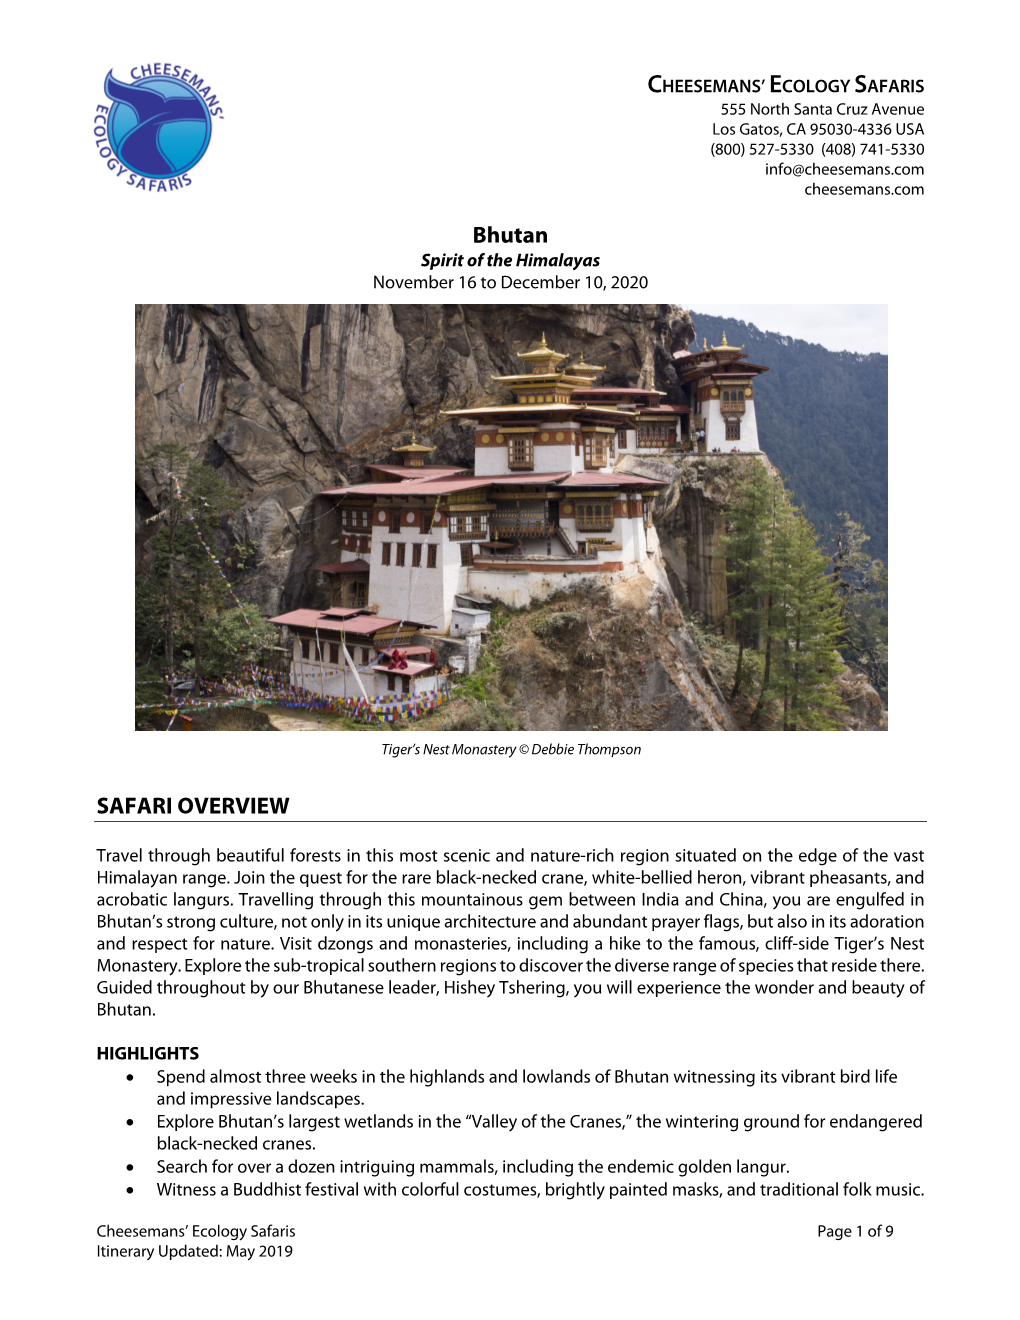 Bhutan SAFARI OVERVIEW